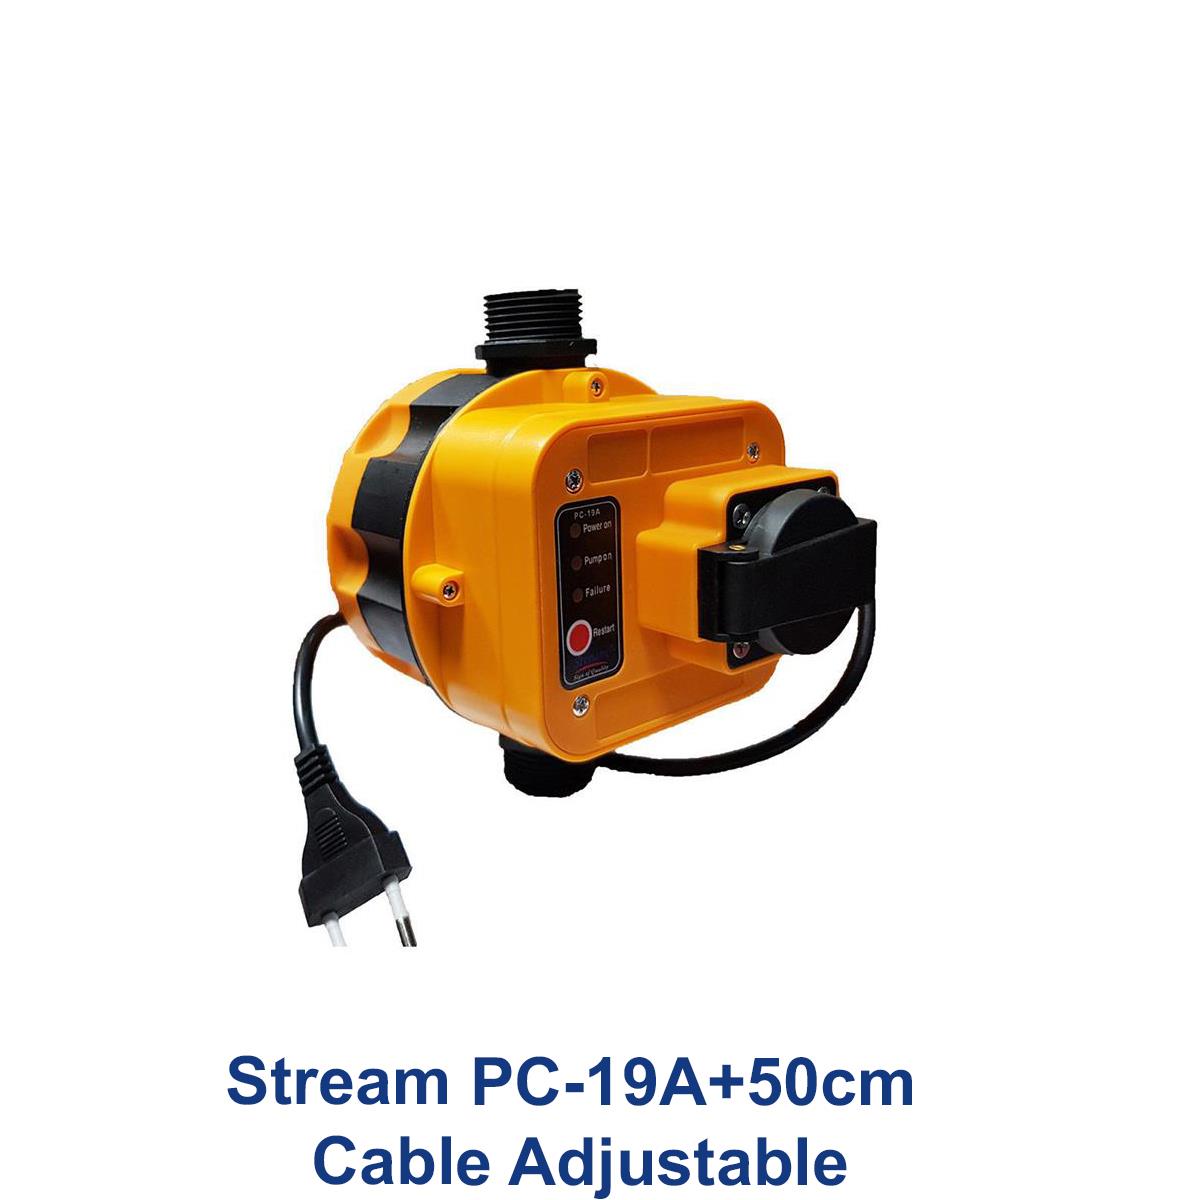 Stream-PC-19A+50cm